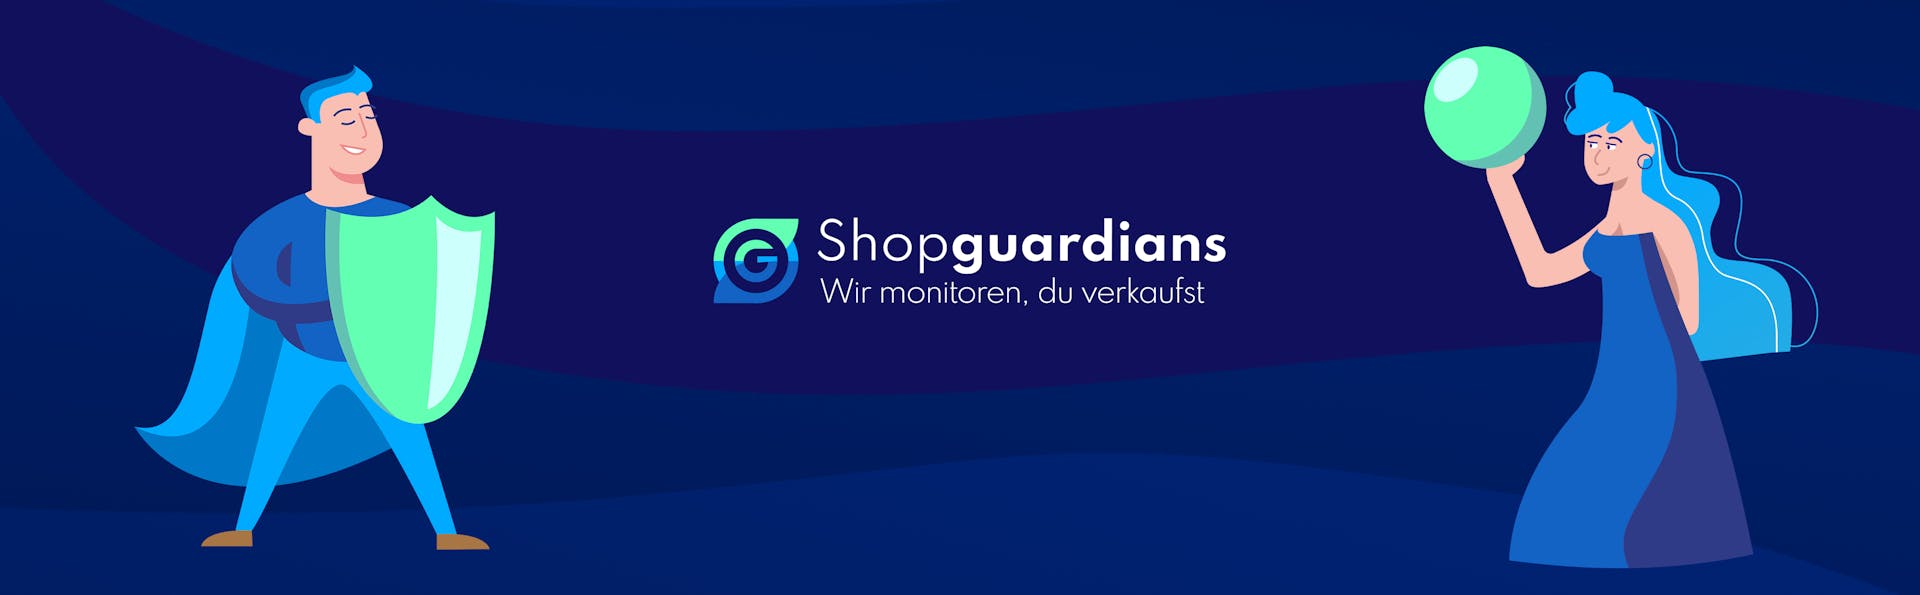 Shopguardians Website